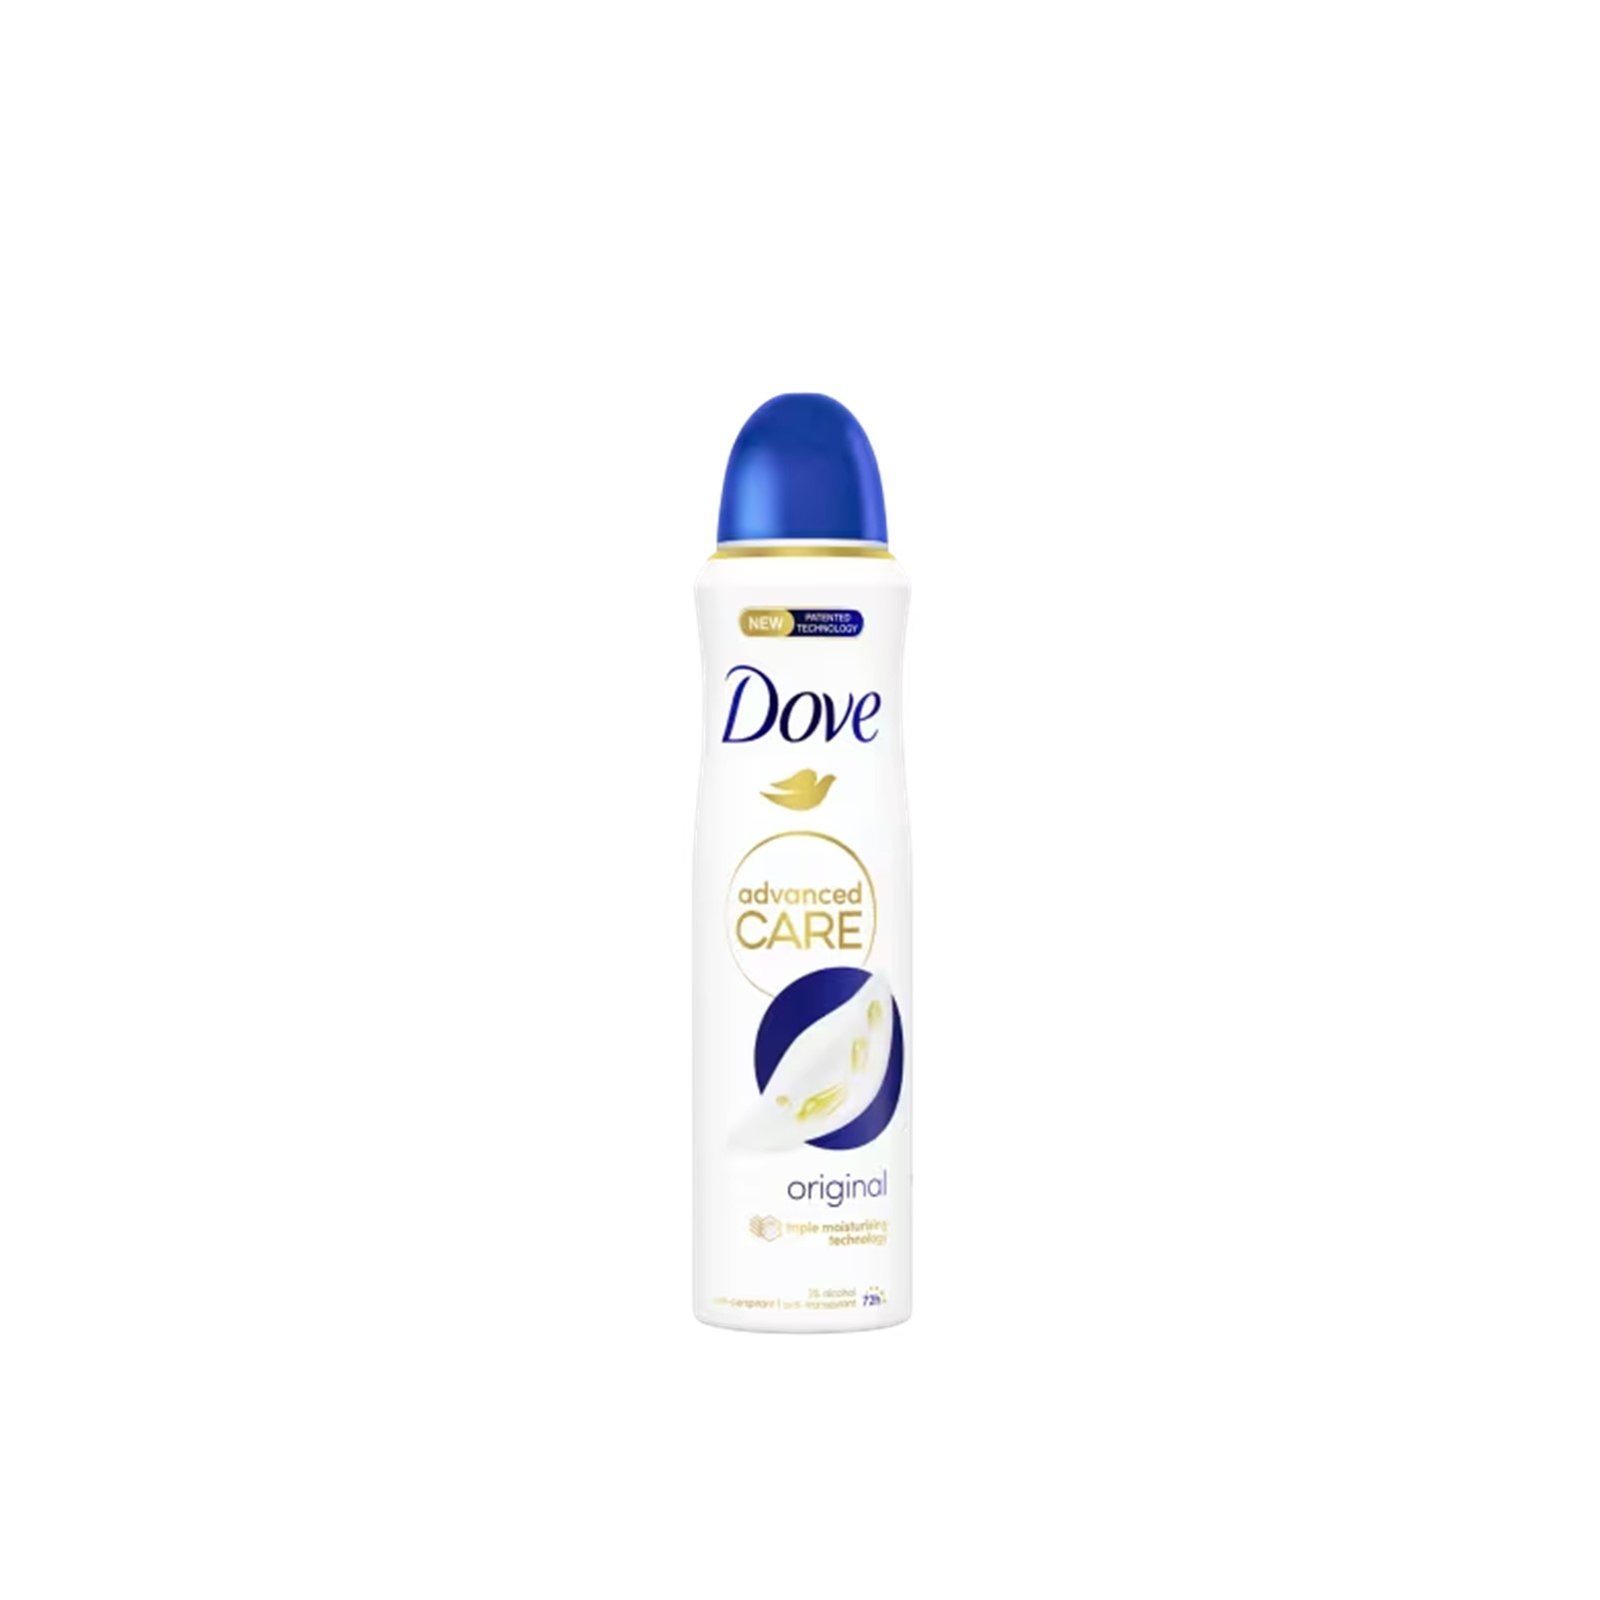 Dove Advanced Care Original 72h Anti-Perspirant Deodorant Spray 150ml